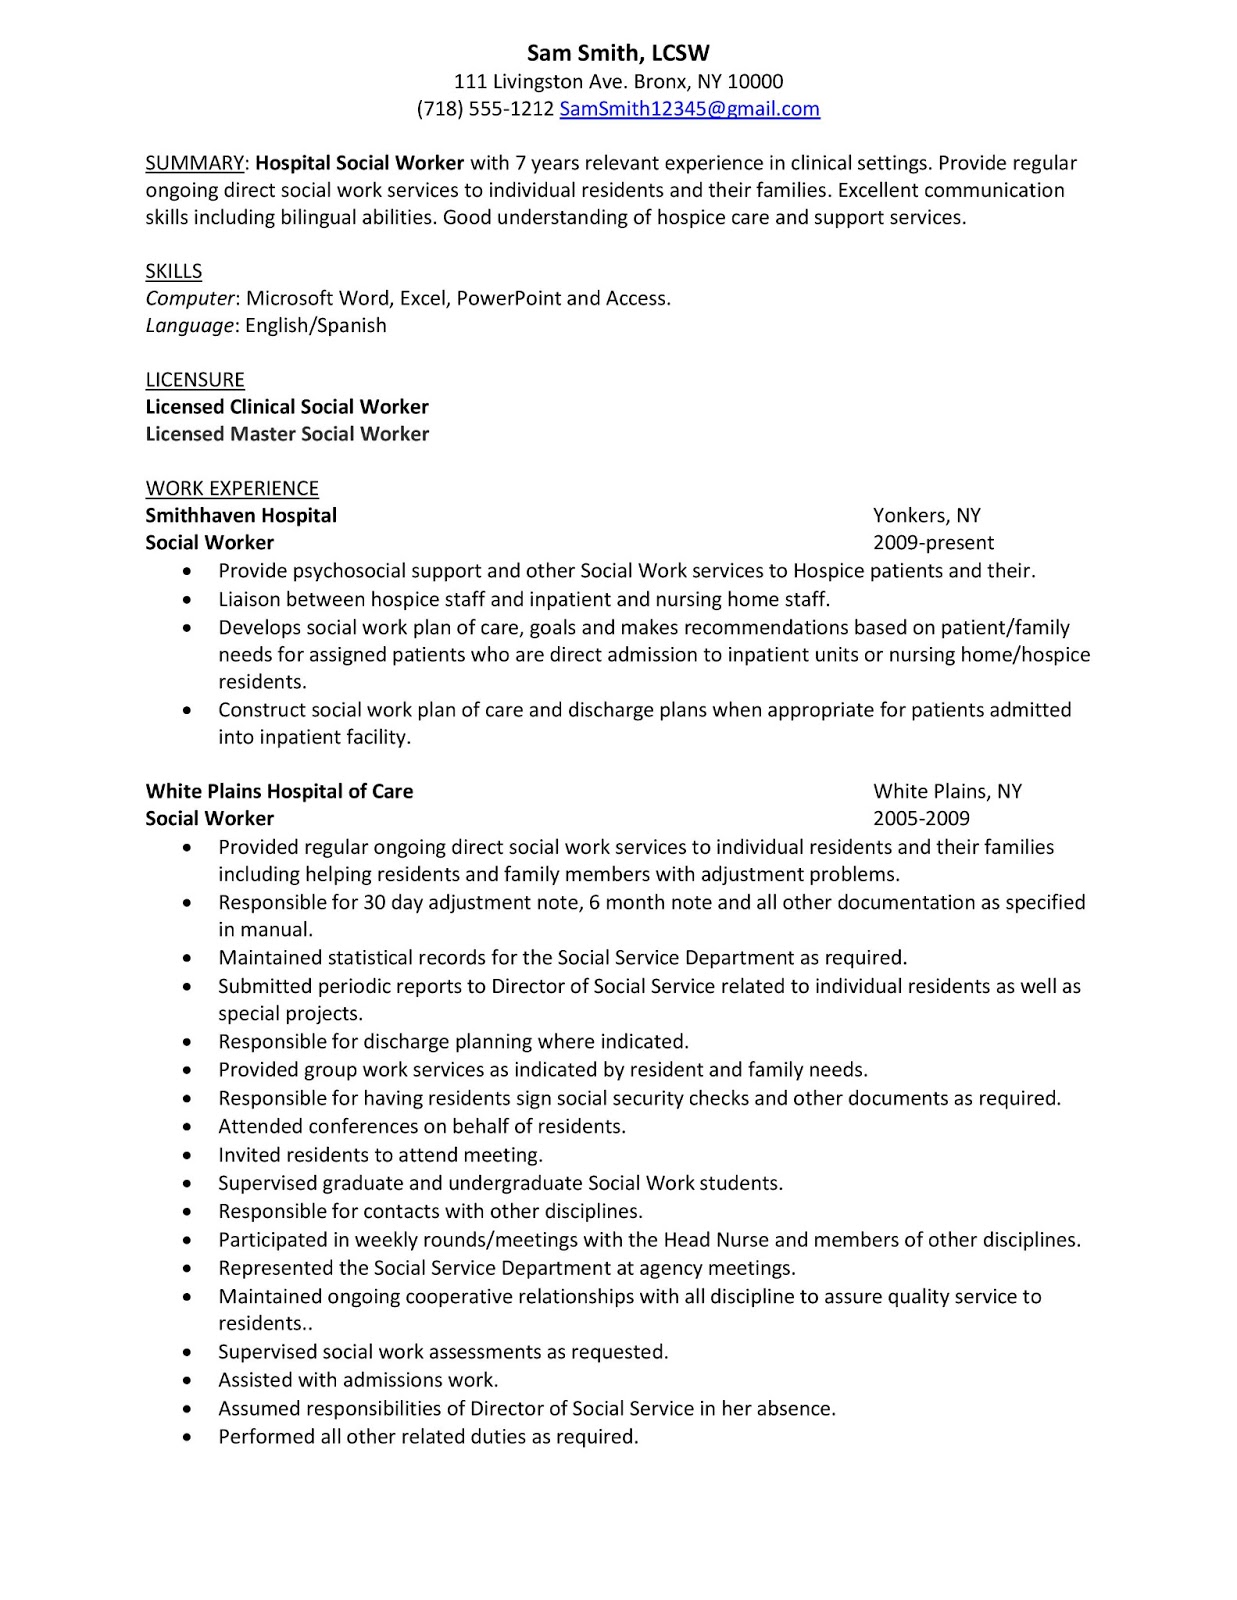 Sample resume for social service work